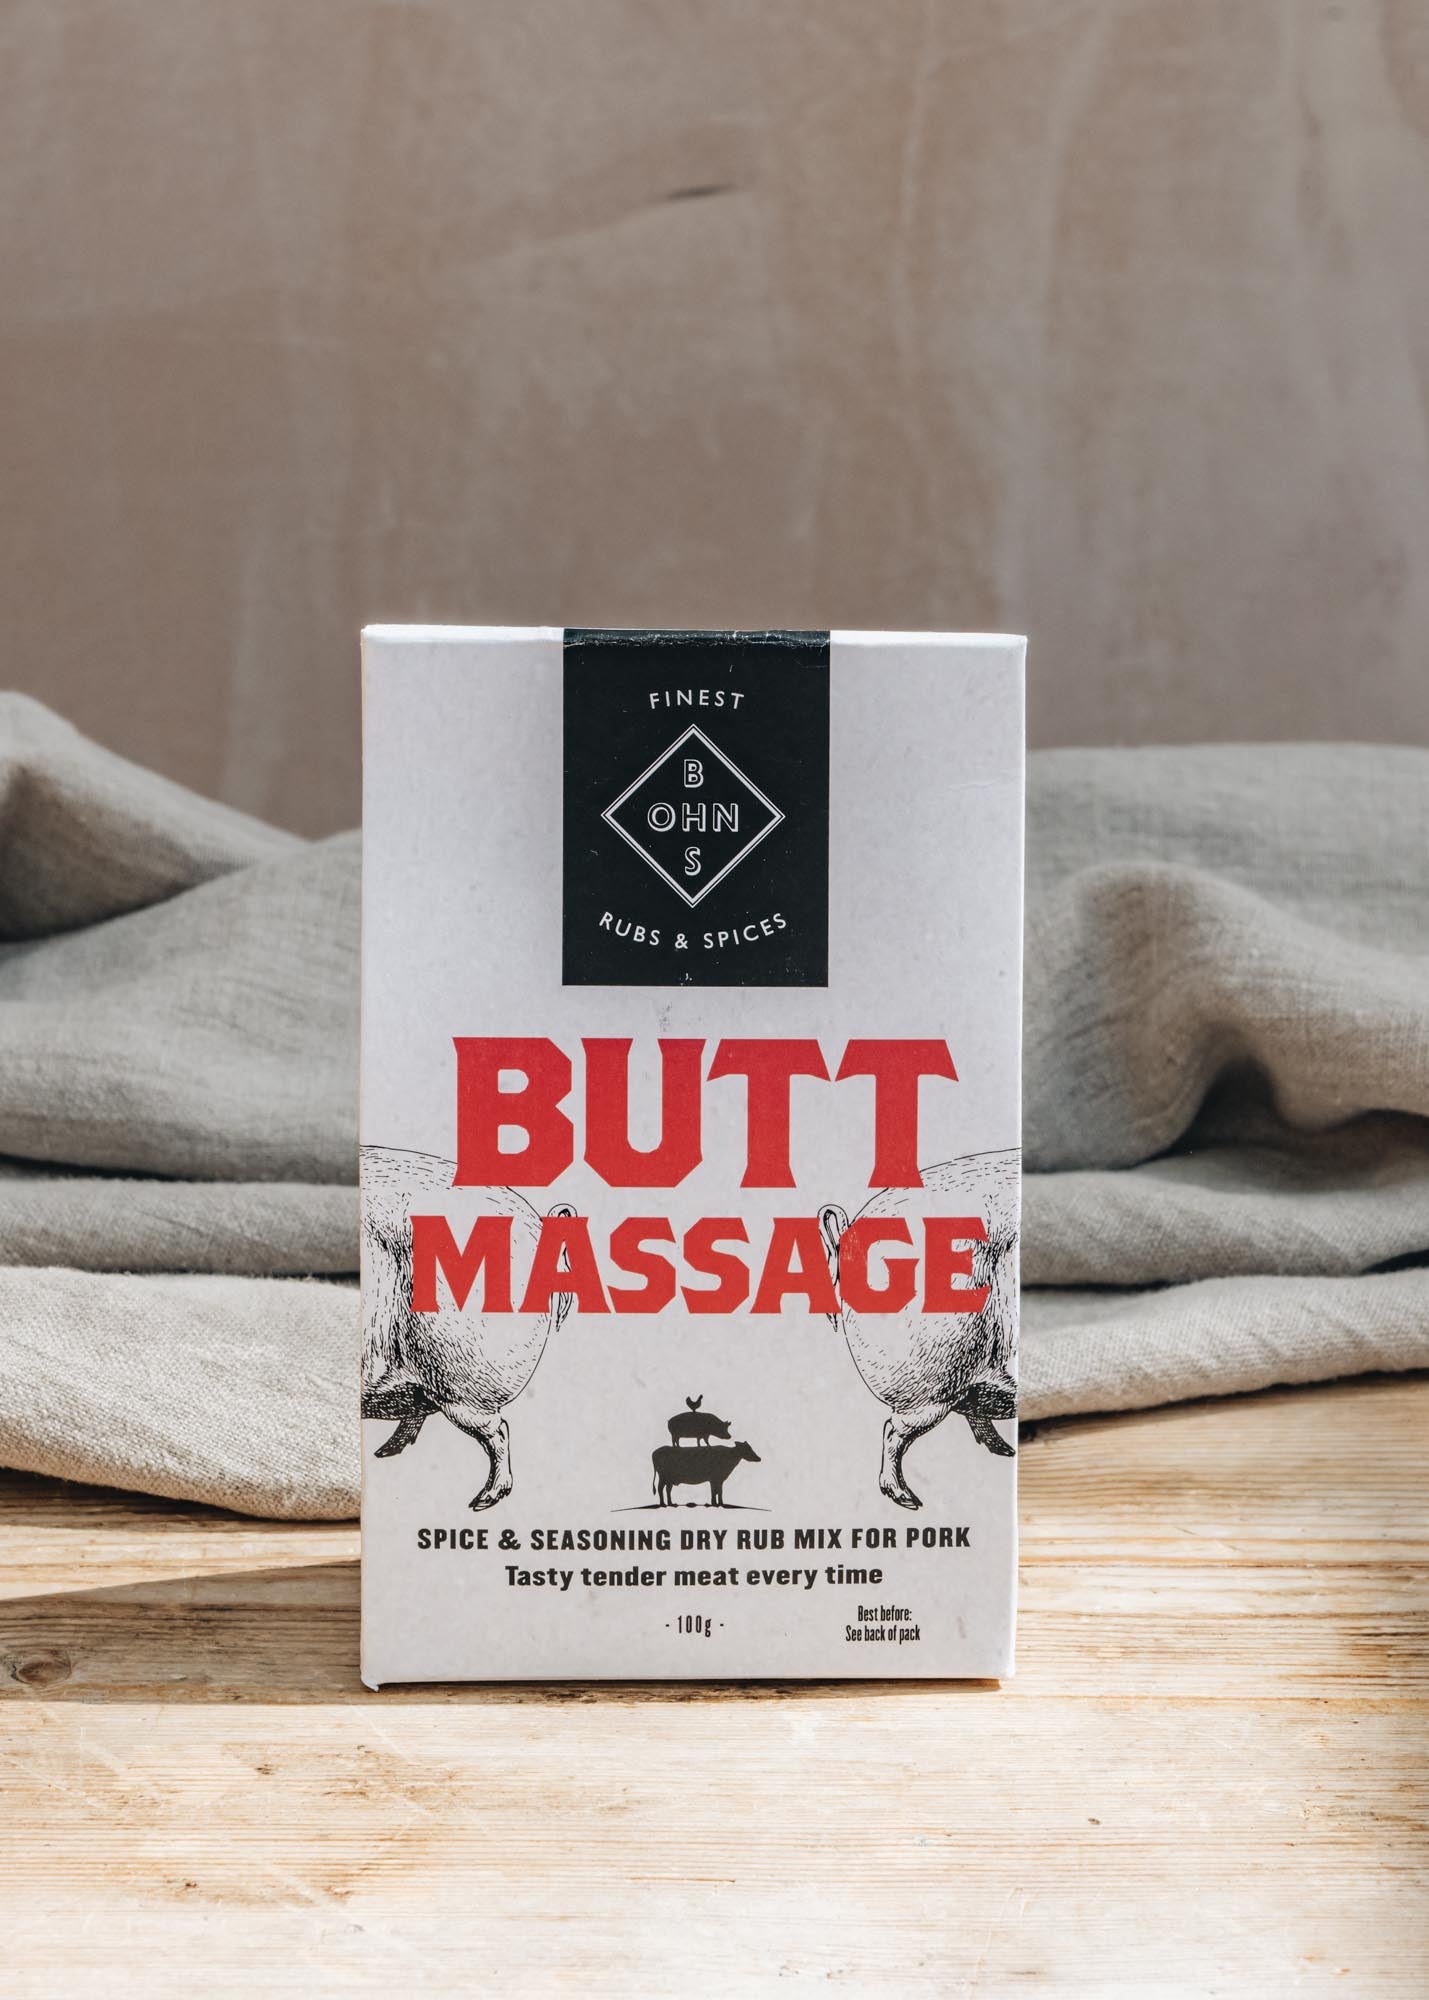 Bohns Butt Massage - Spice and seasoning dry rub mix